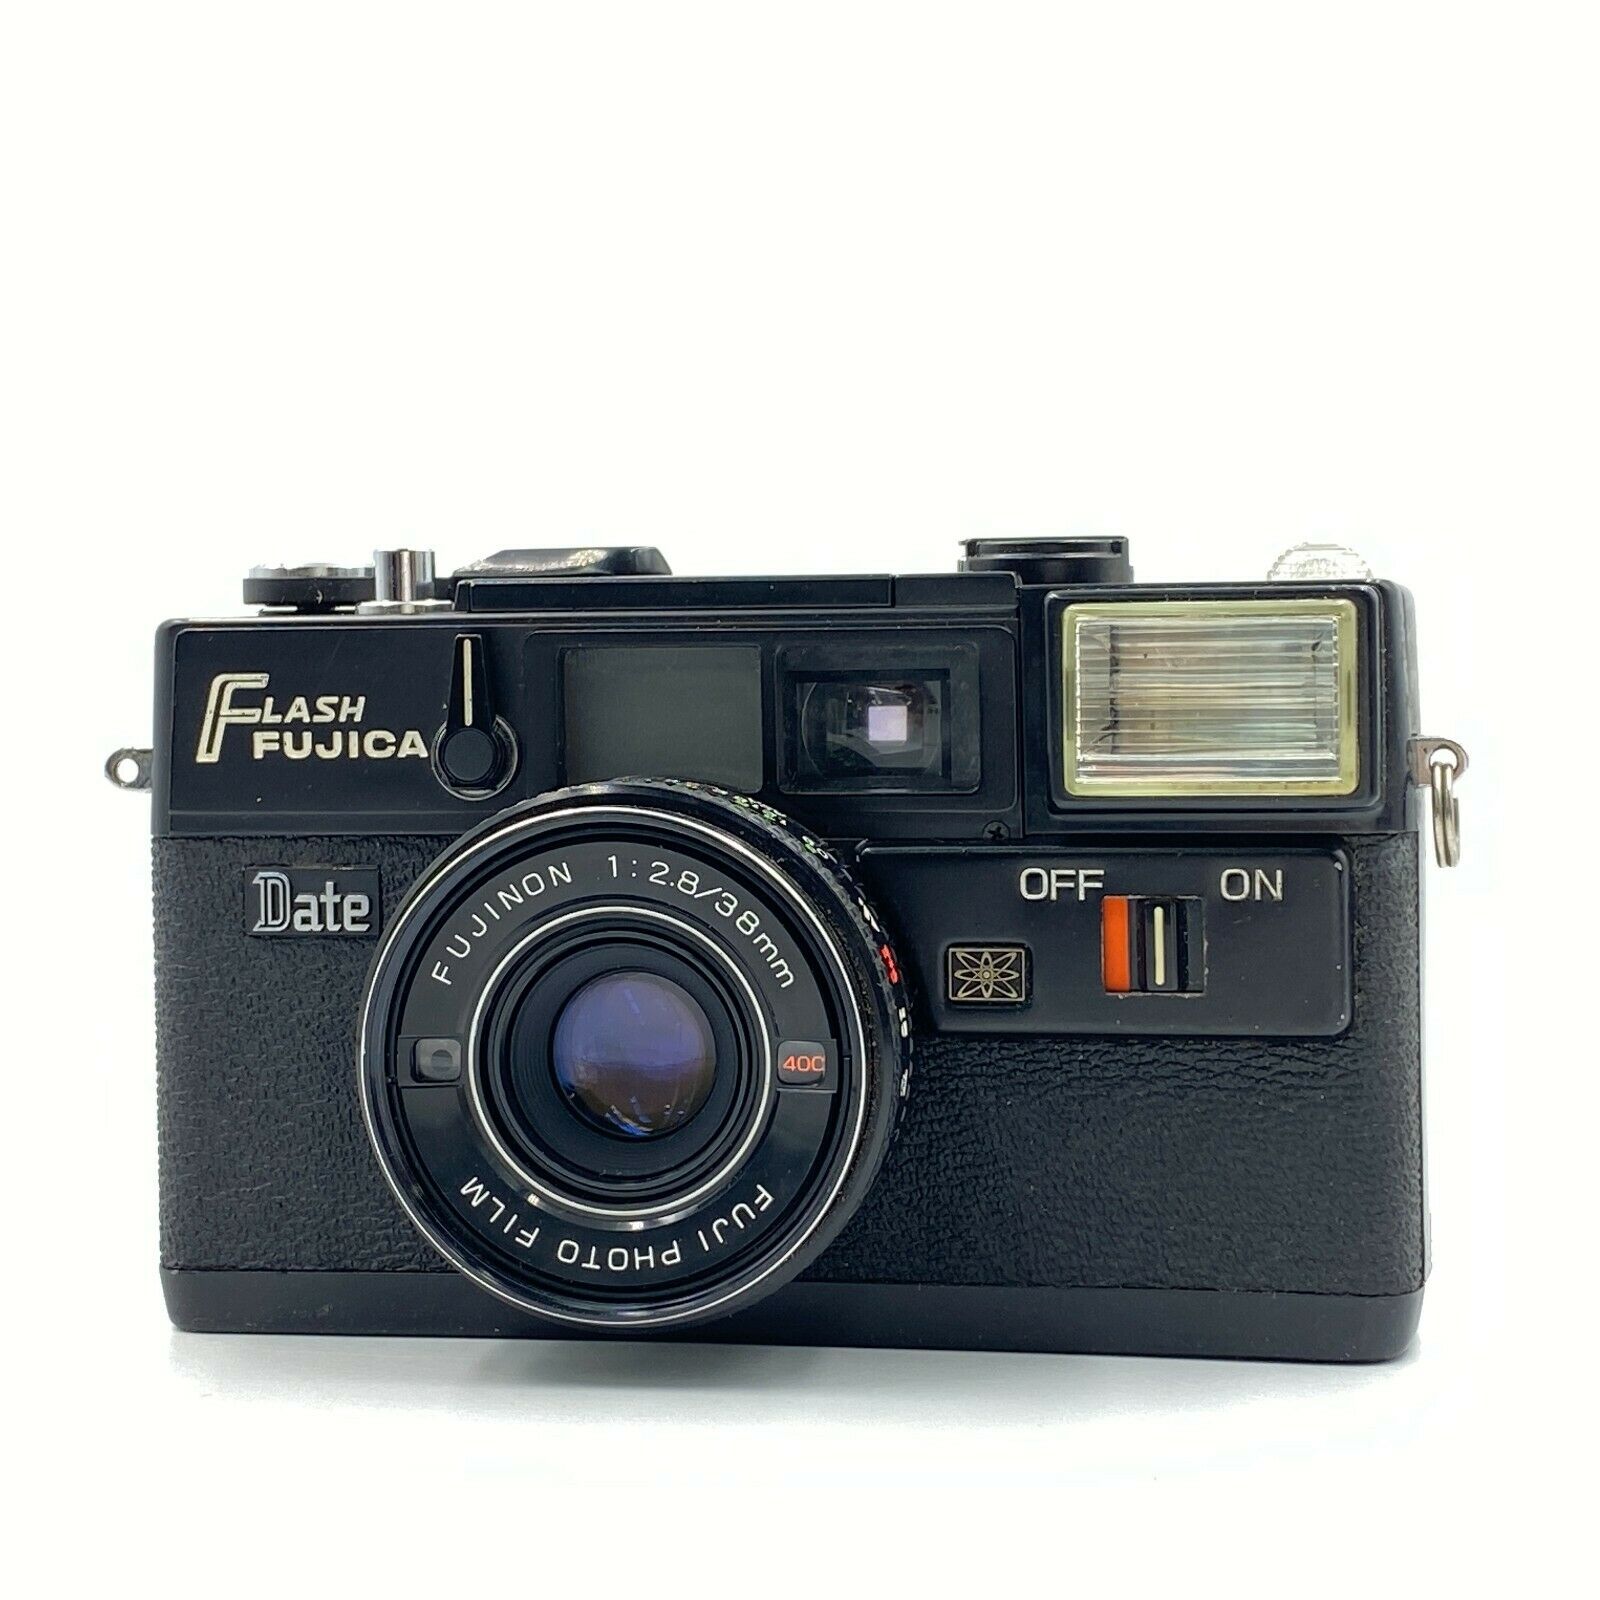 Fujica Flash Date Fujinon 38mm F2.8 芸能人愛用 - フィルムカメラ